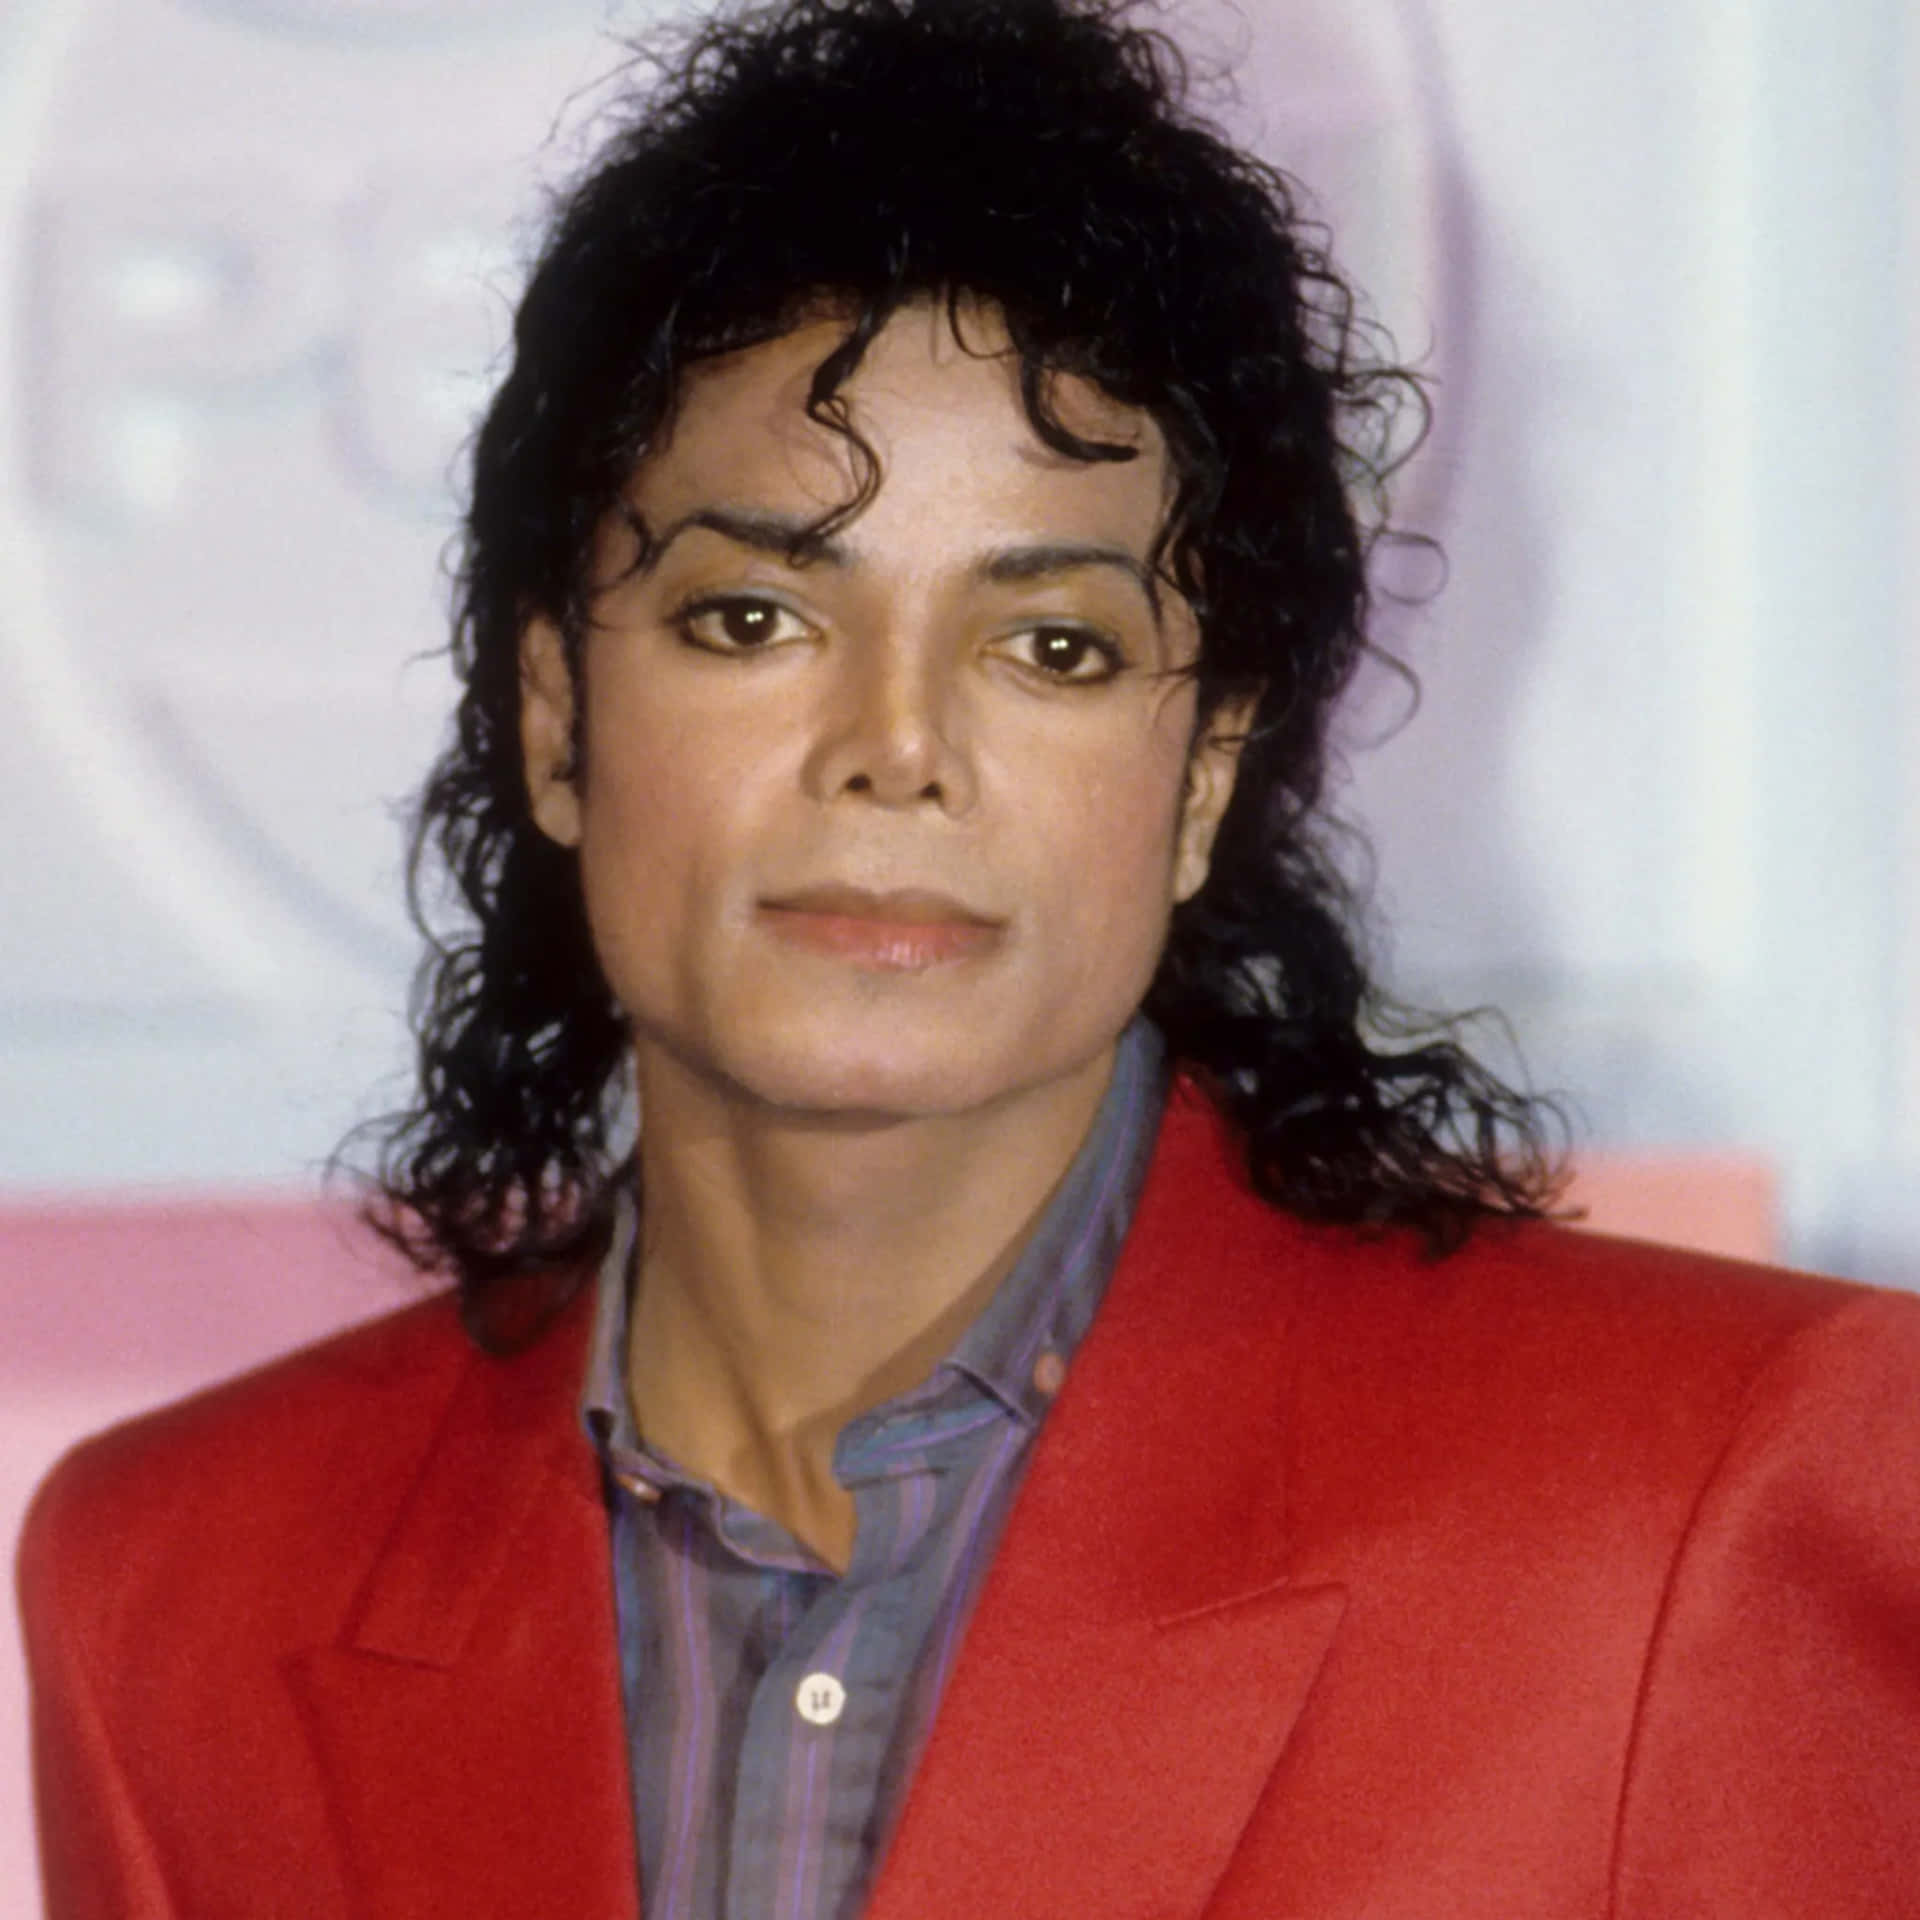 Iconic Red Jacket Portrait